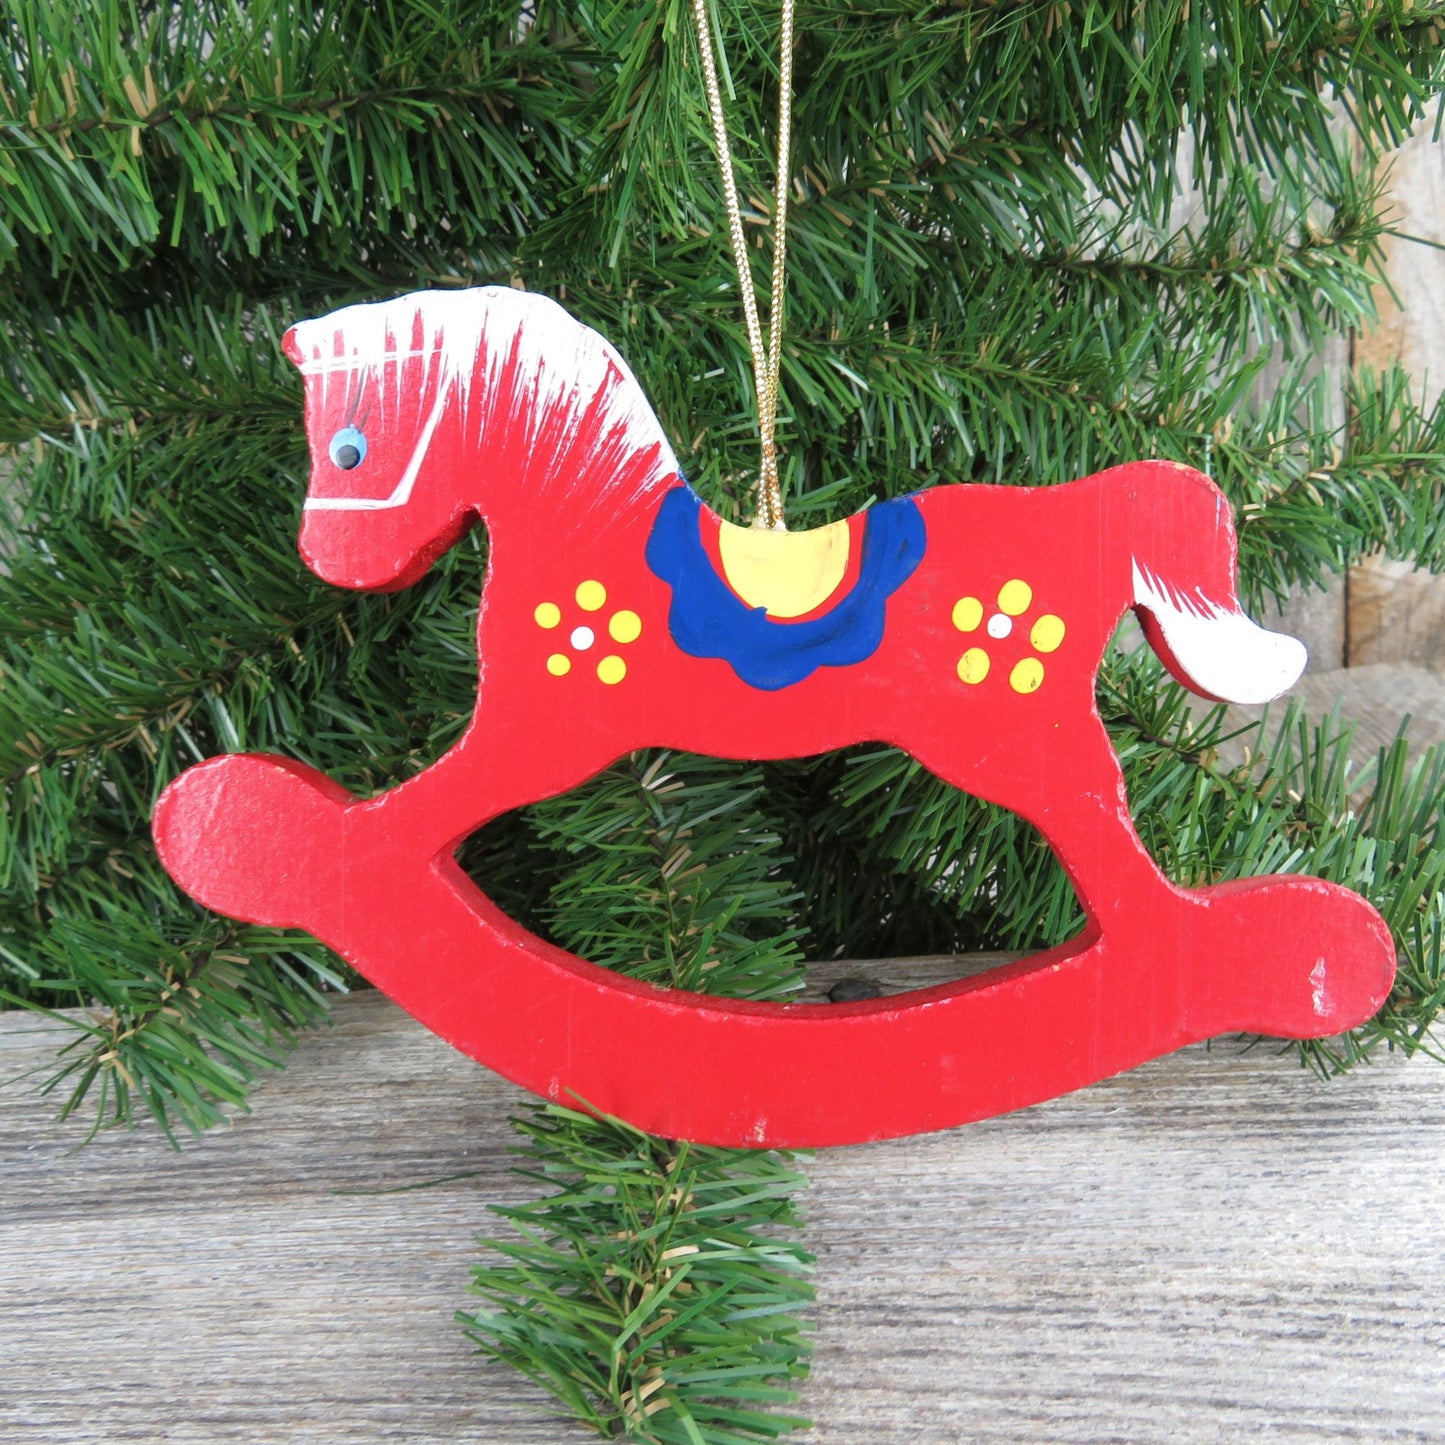 Vintage Rocking Horse Ogunquit Maine Wood Ornament Christmas Red Wooden Souvenir Tourist